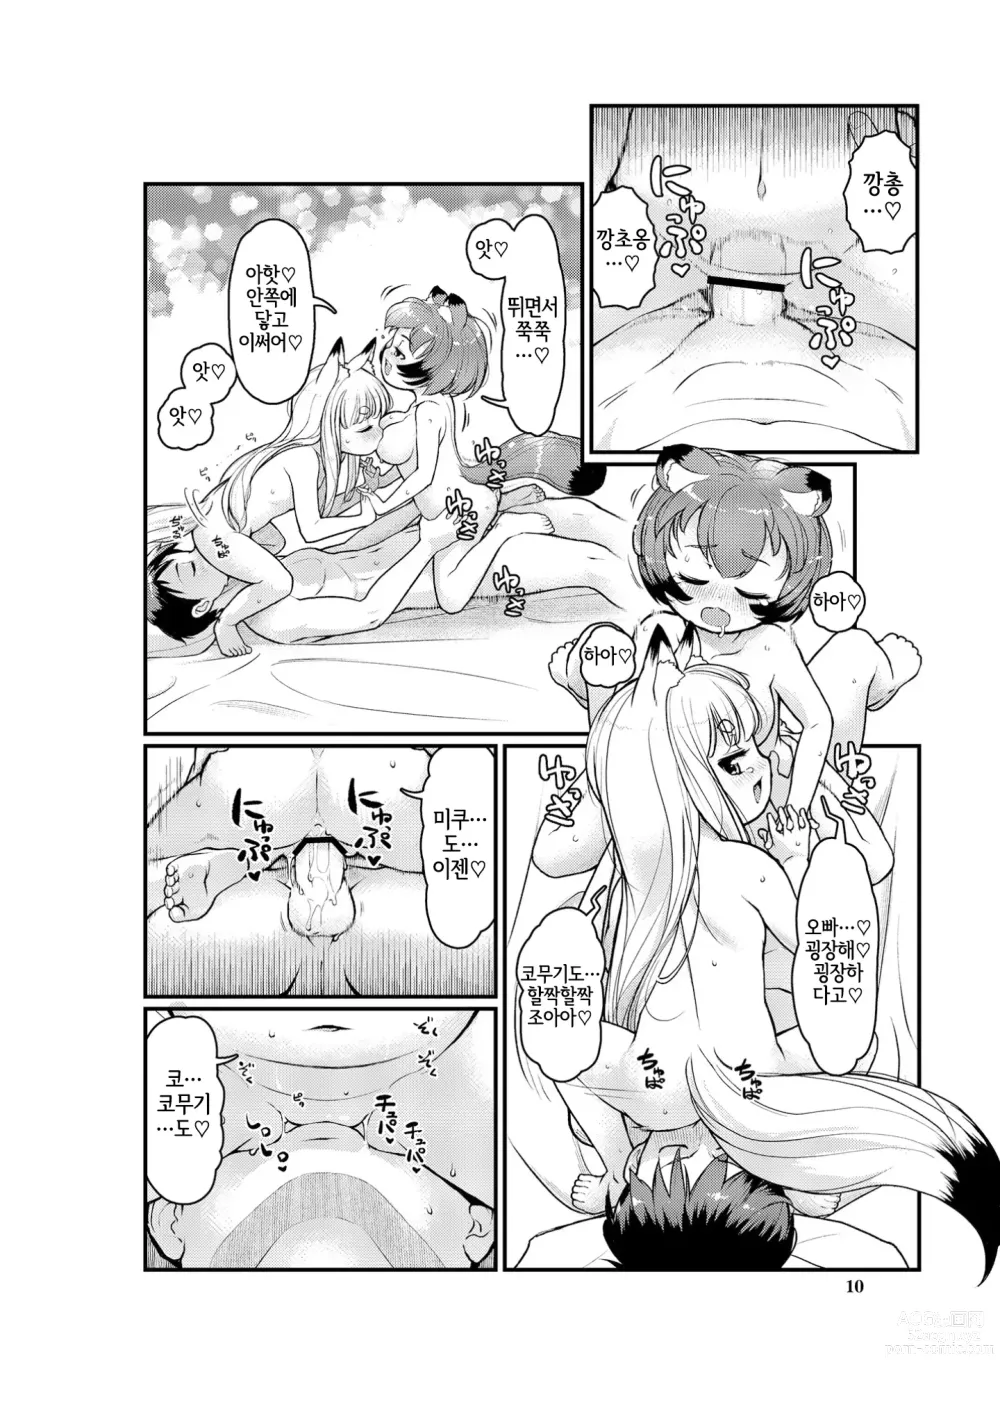 Page 9 of doujinshi KemoMimi Morning Routine 1